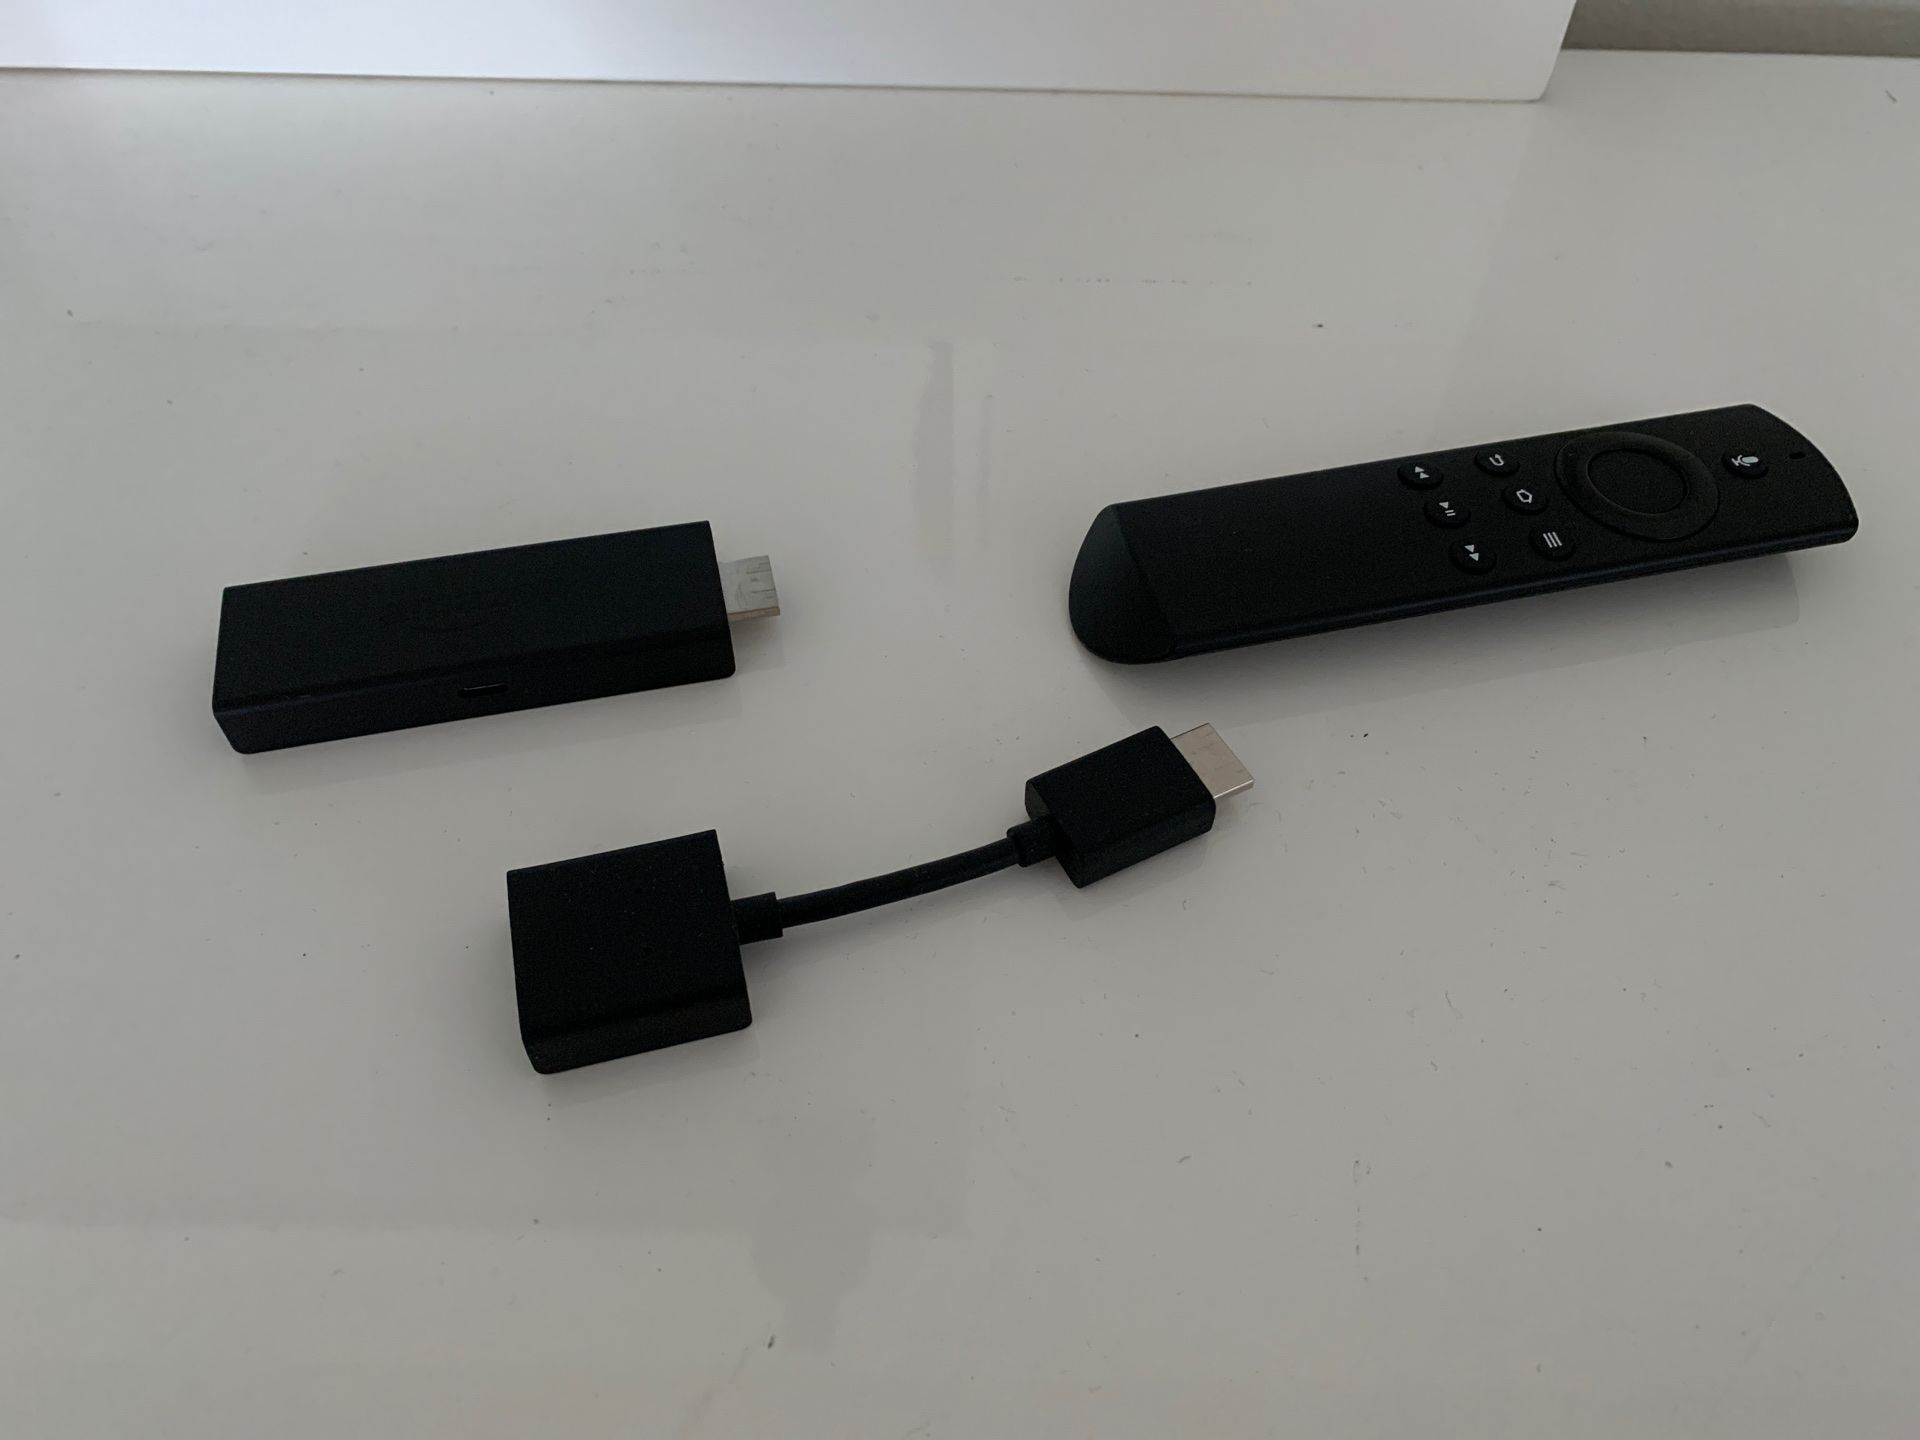 Fire Tv Stick (Amazon)